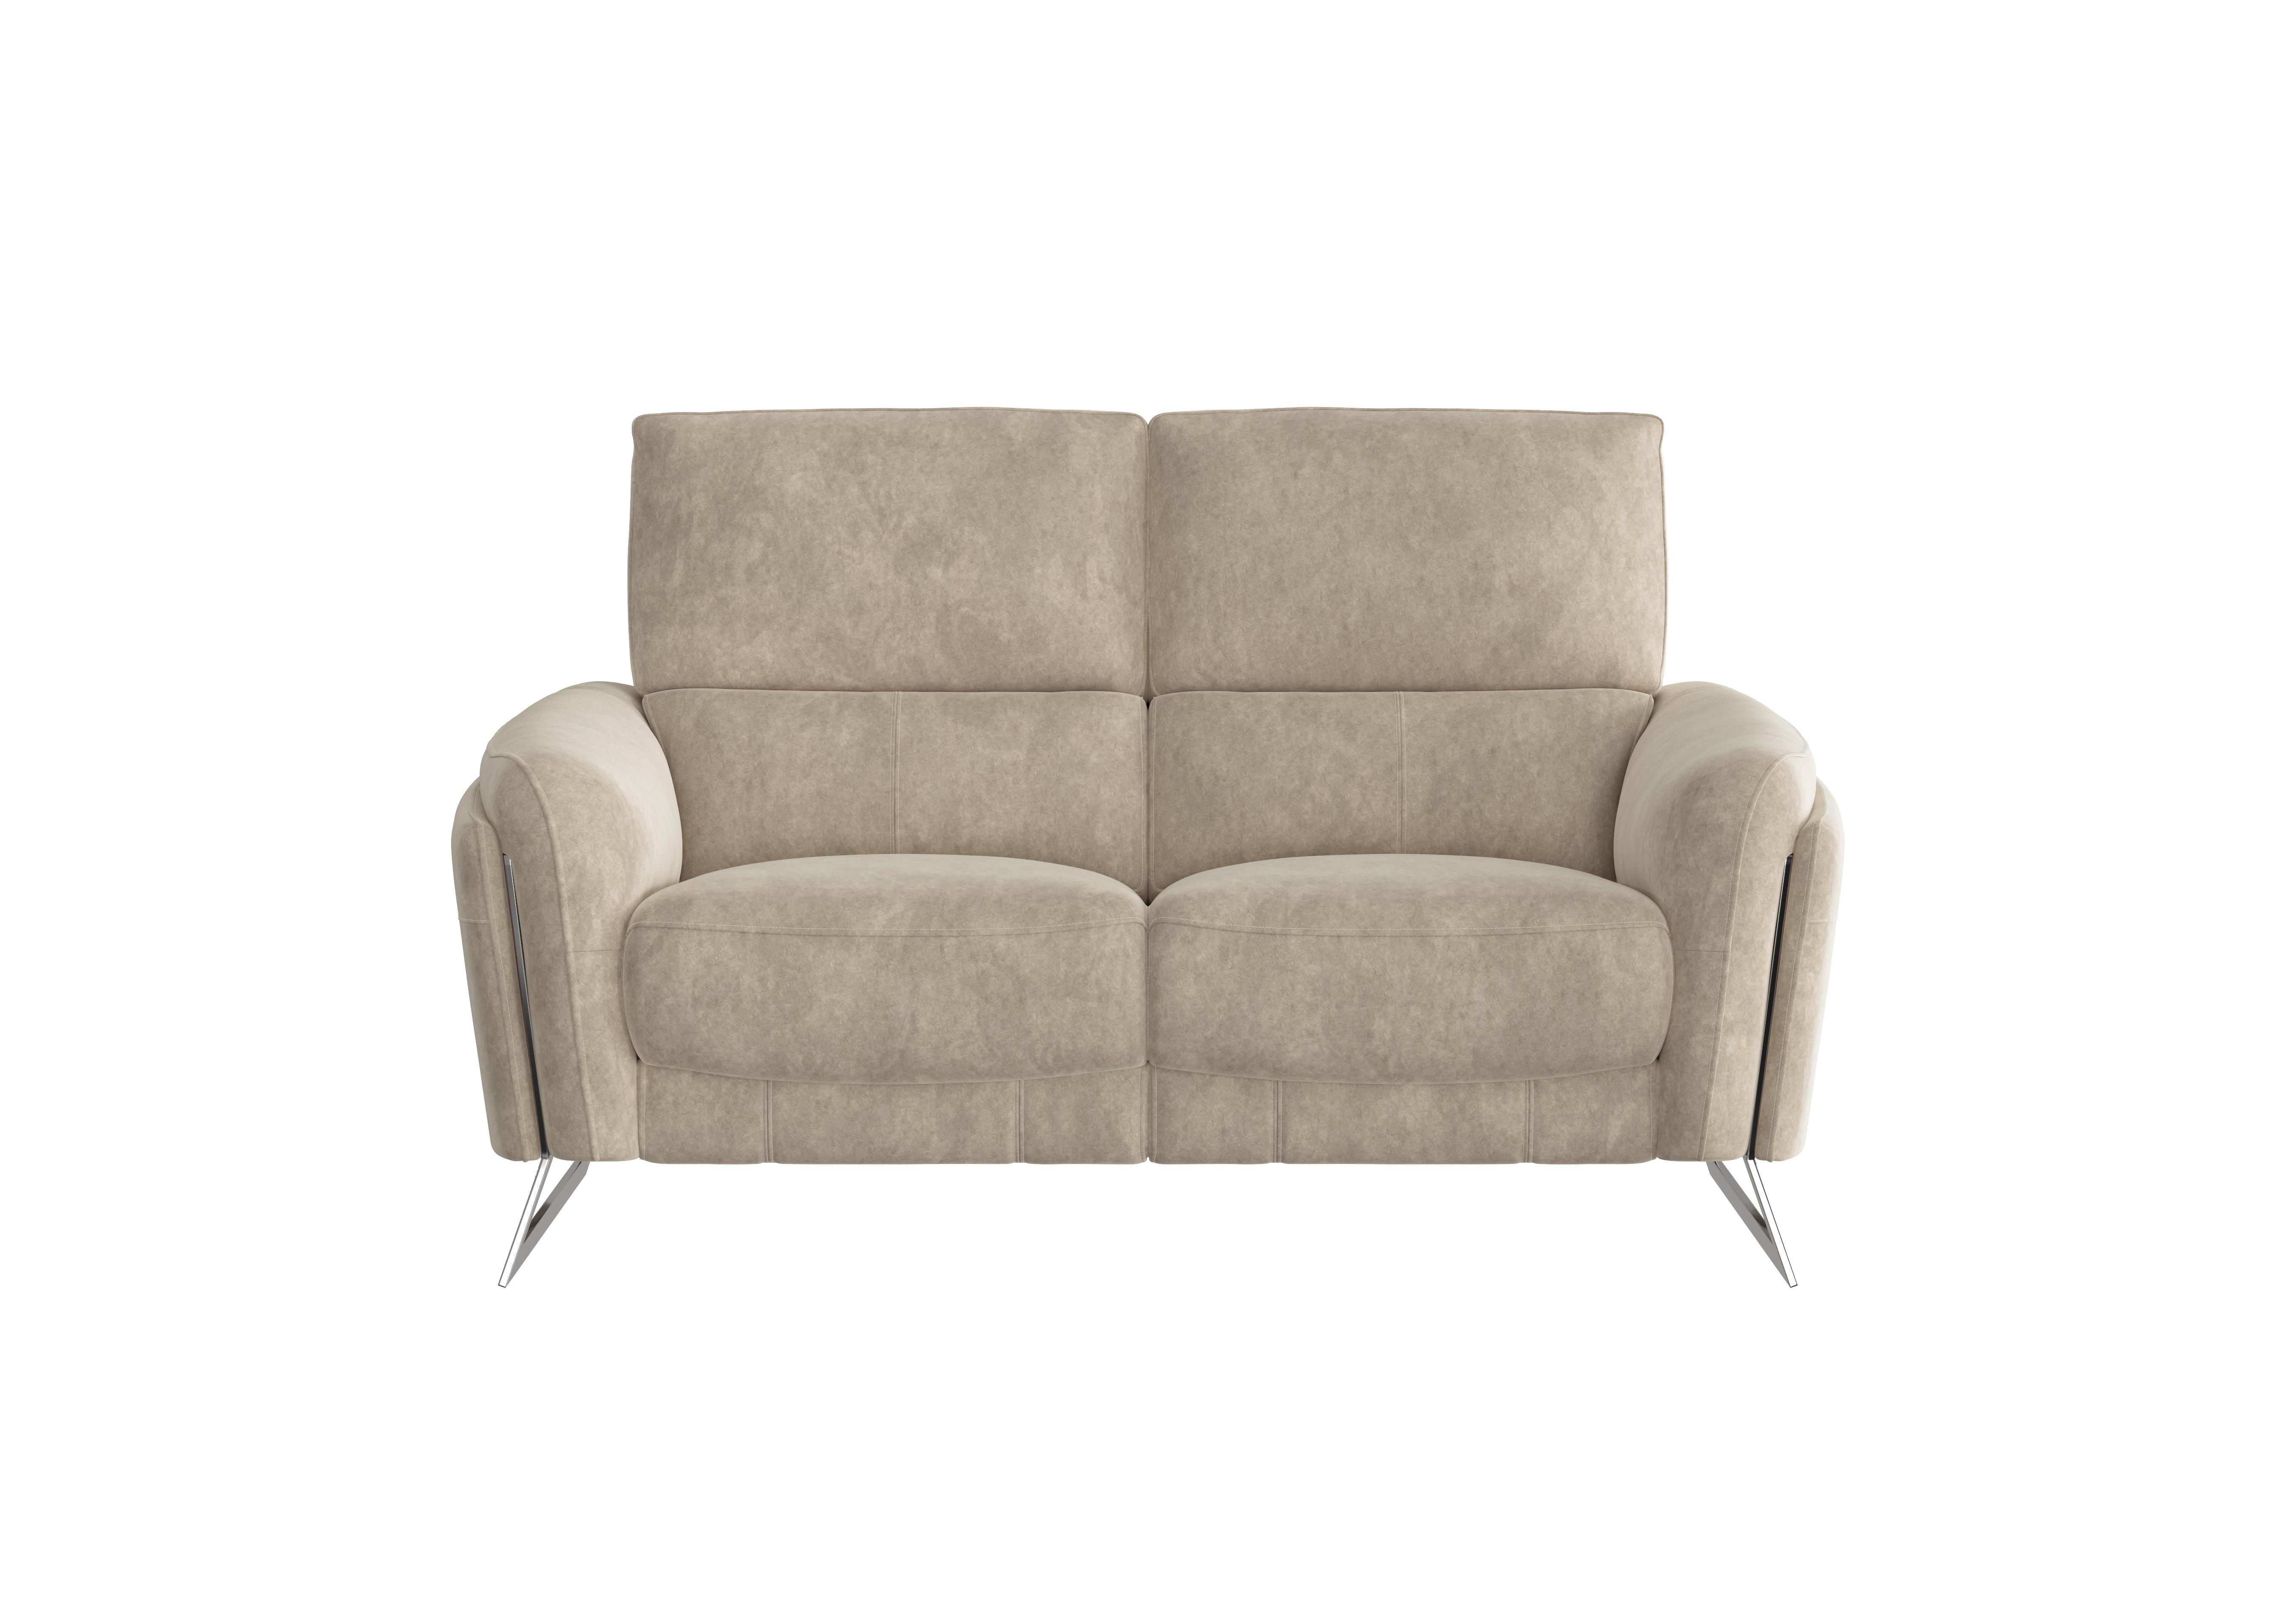 Amarilla 2 Seater Fabric Sofa in Bfa-Bnn-R26 Cream on Furniture Village